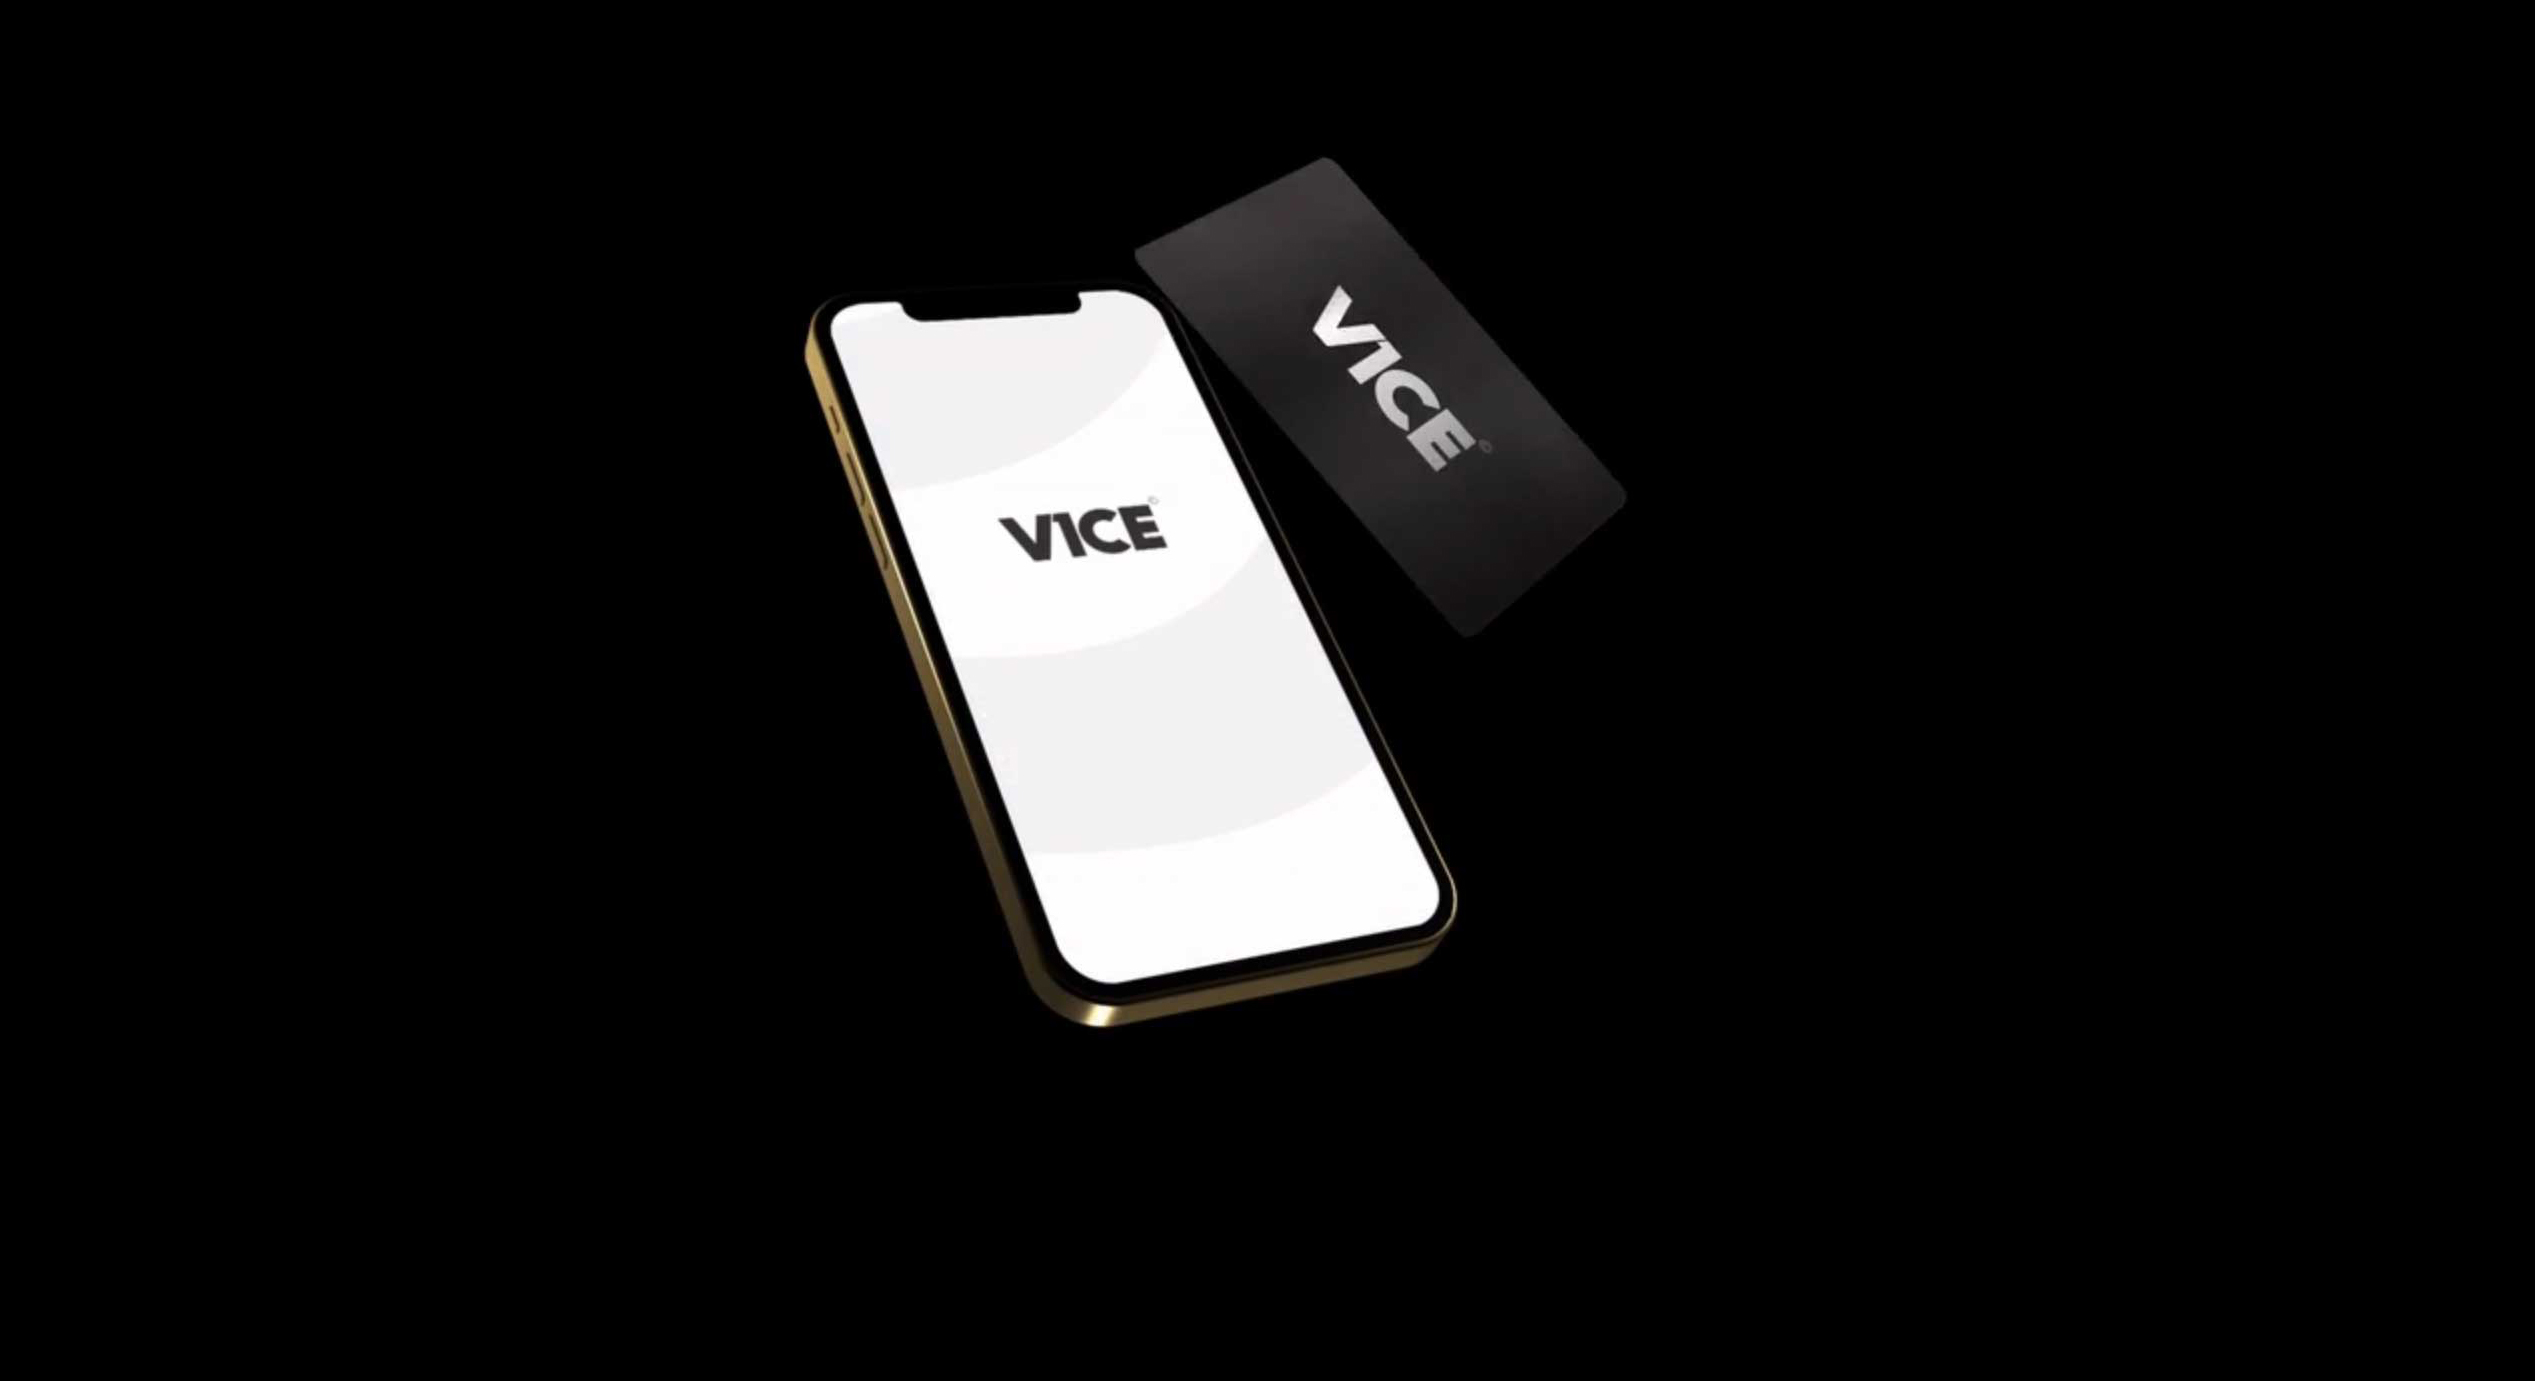 V1ce smart phone NFC case